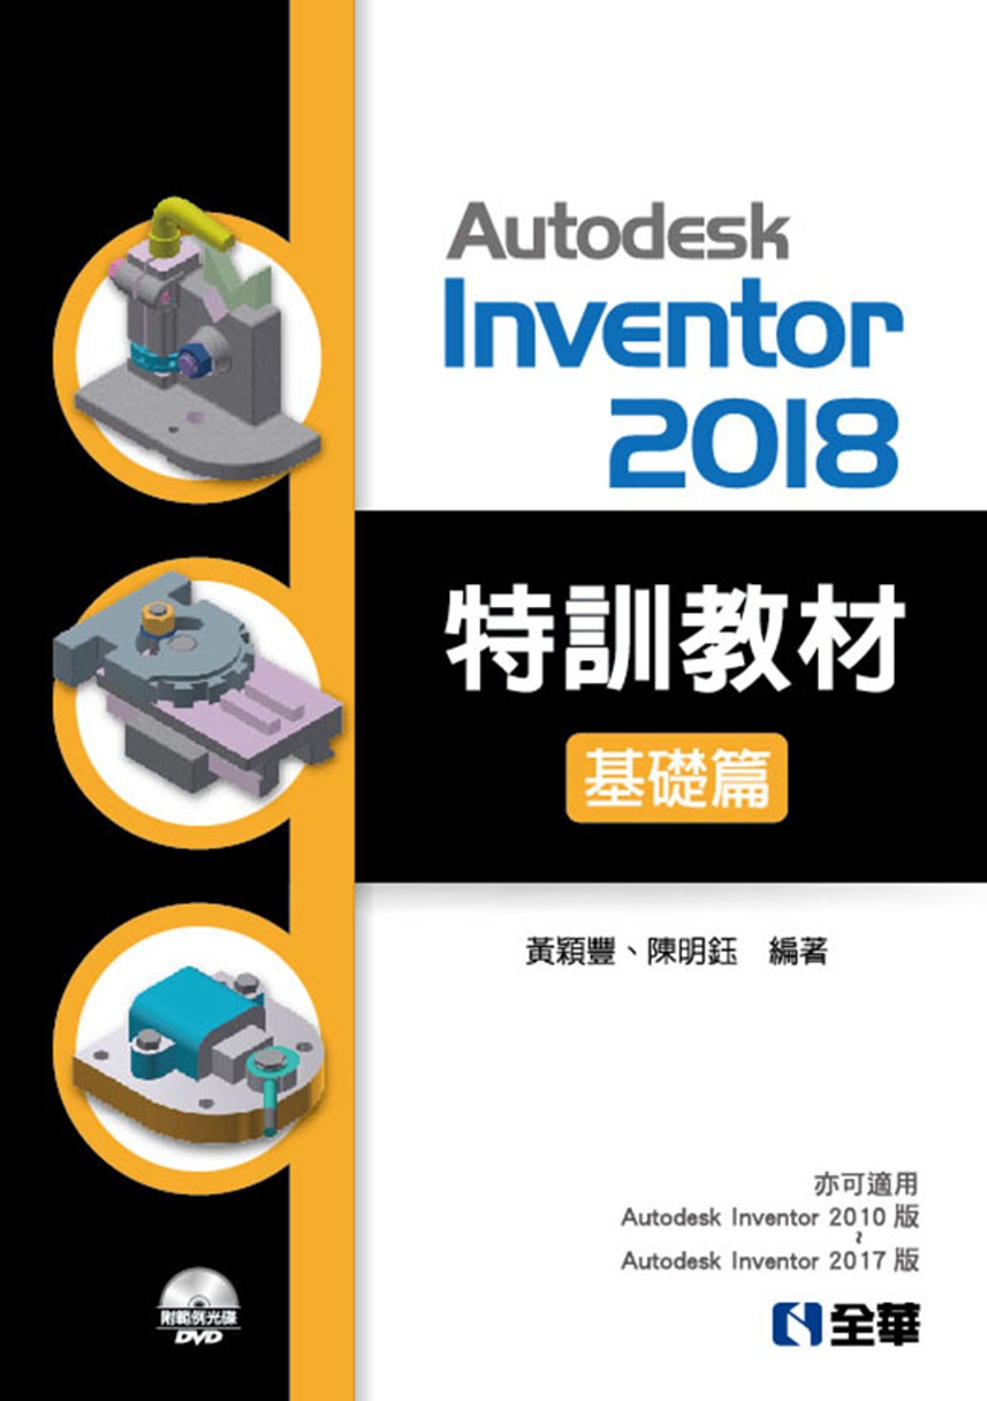 Autodesk Inventor 2018 特訓教材基礎篇...